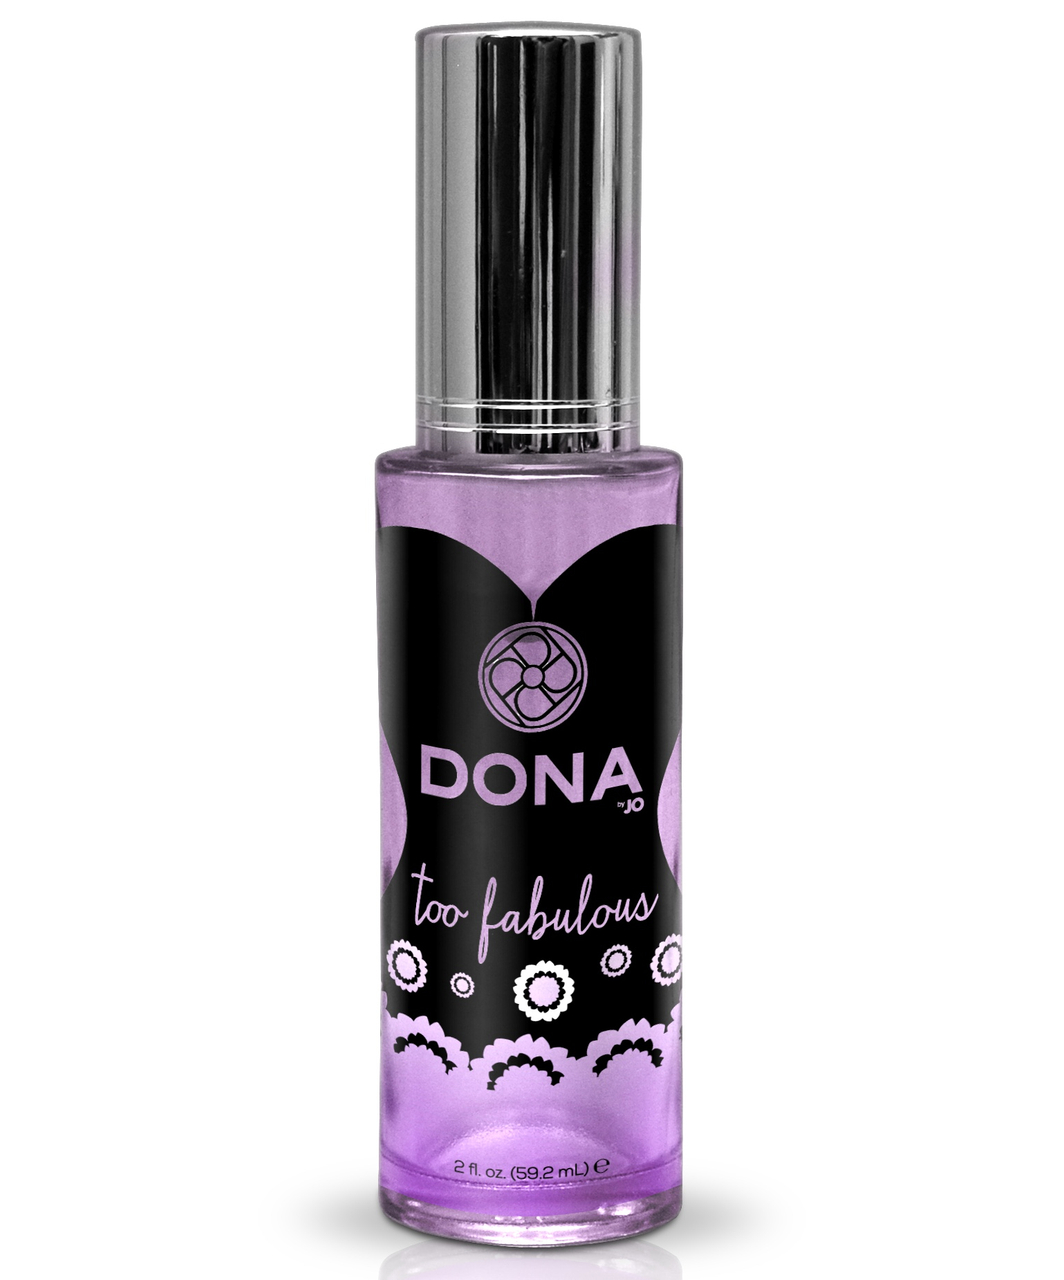 Dona pheromone perfume for Her (60 ml)